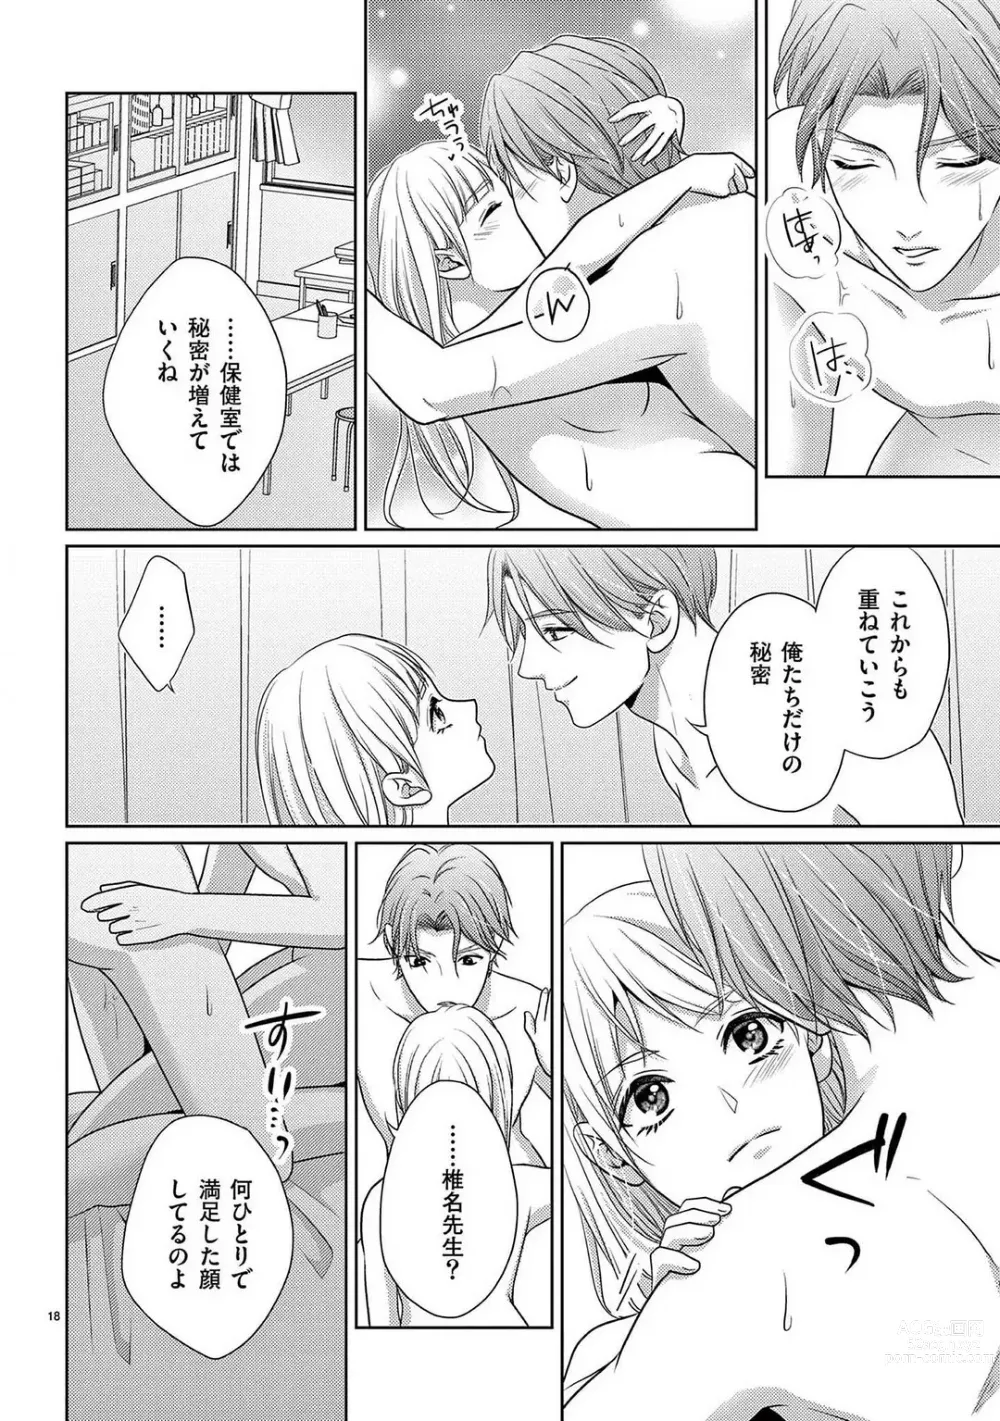 Page 179 of manga Sono Ase, Sekkusu Pafuyūmu. 〜 Sutte, Kisushite, Musabotte~Chp.1-7